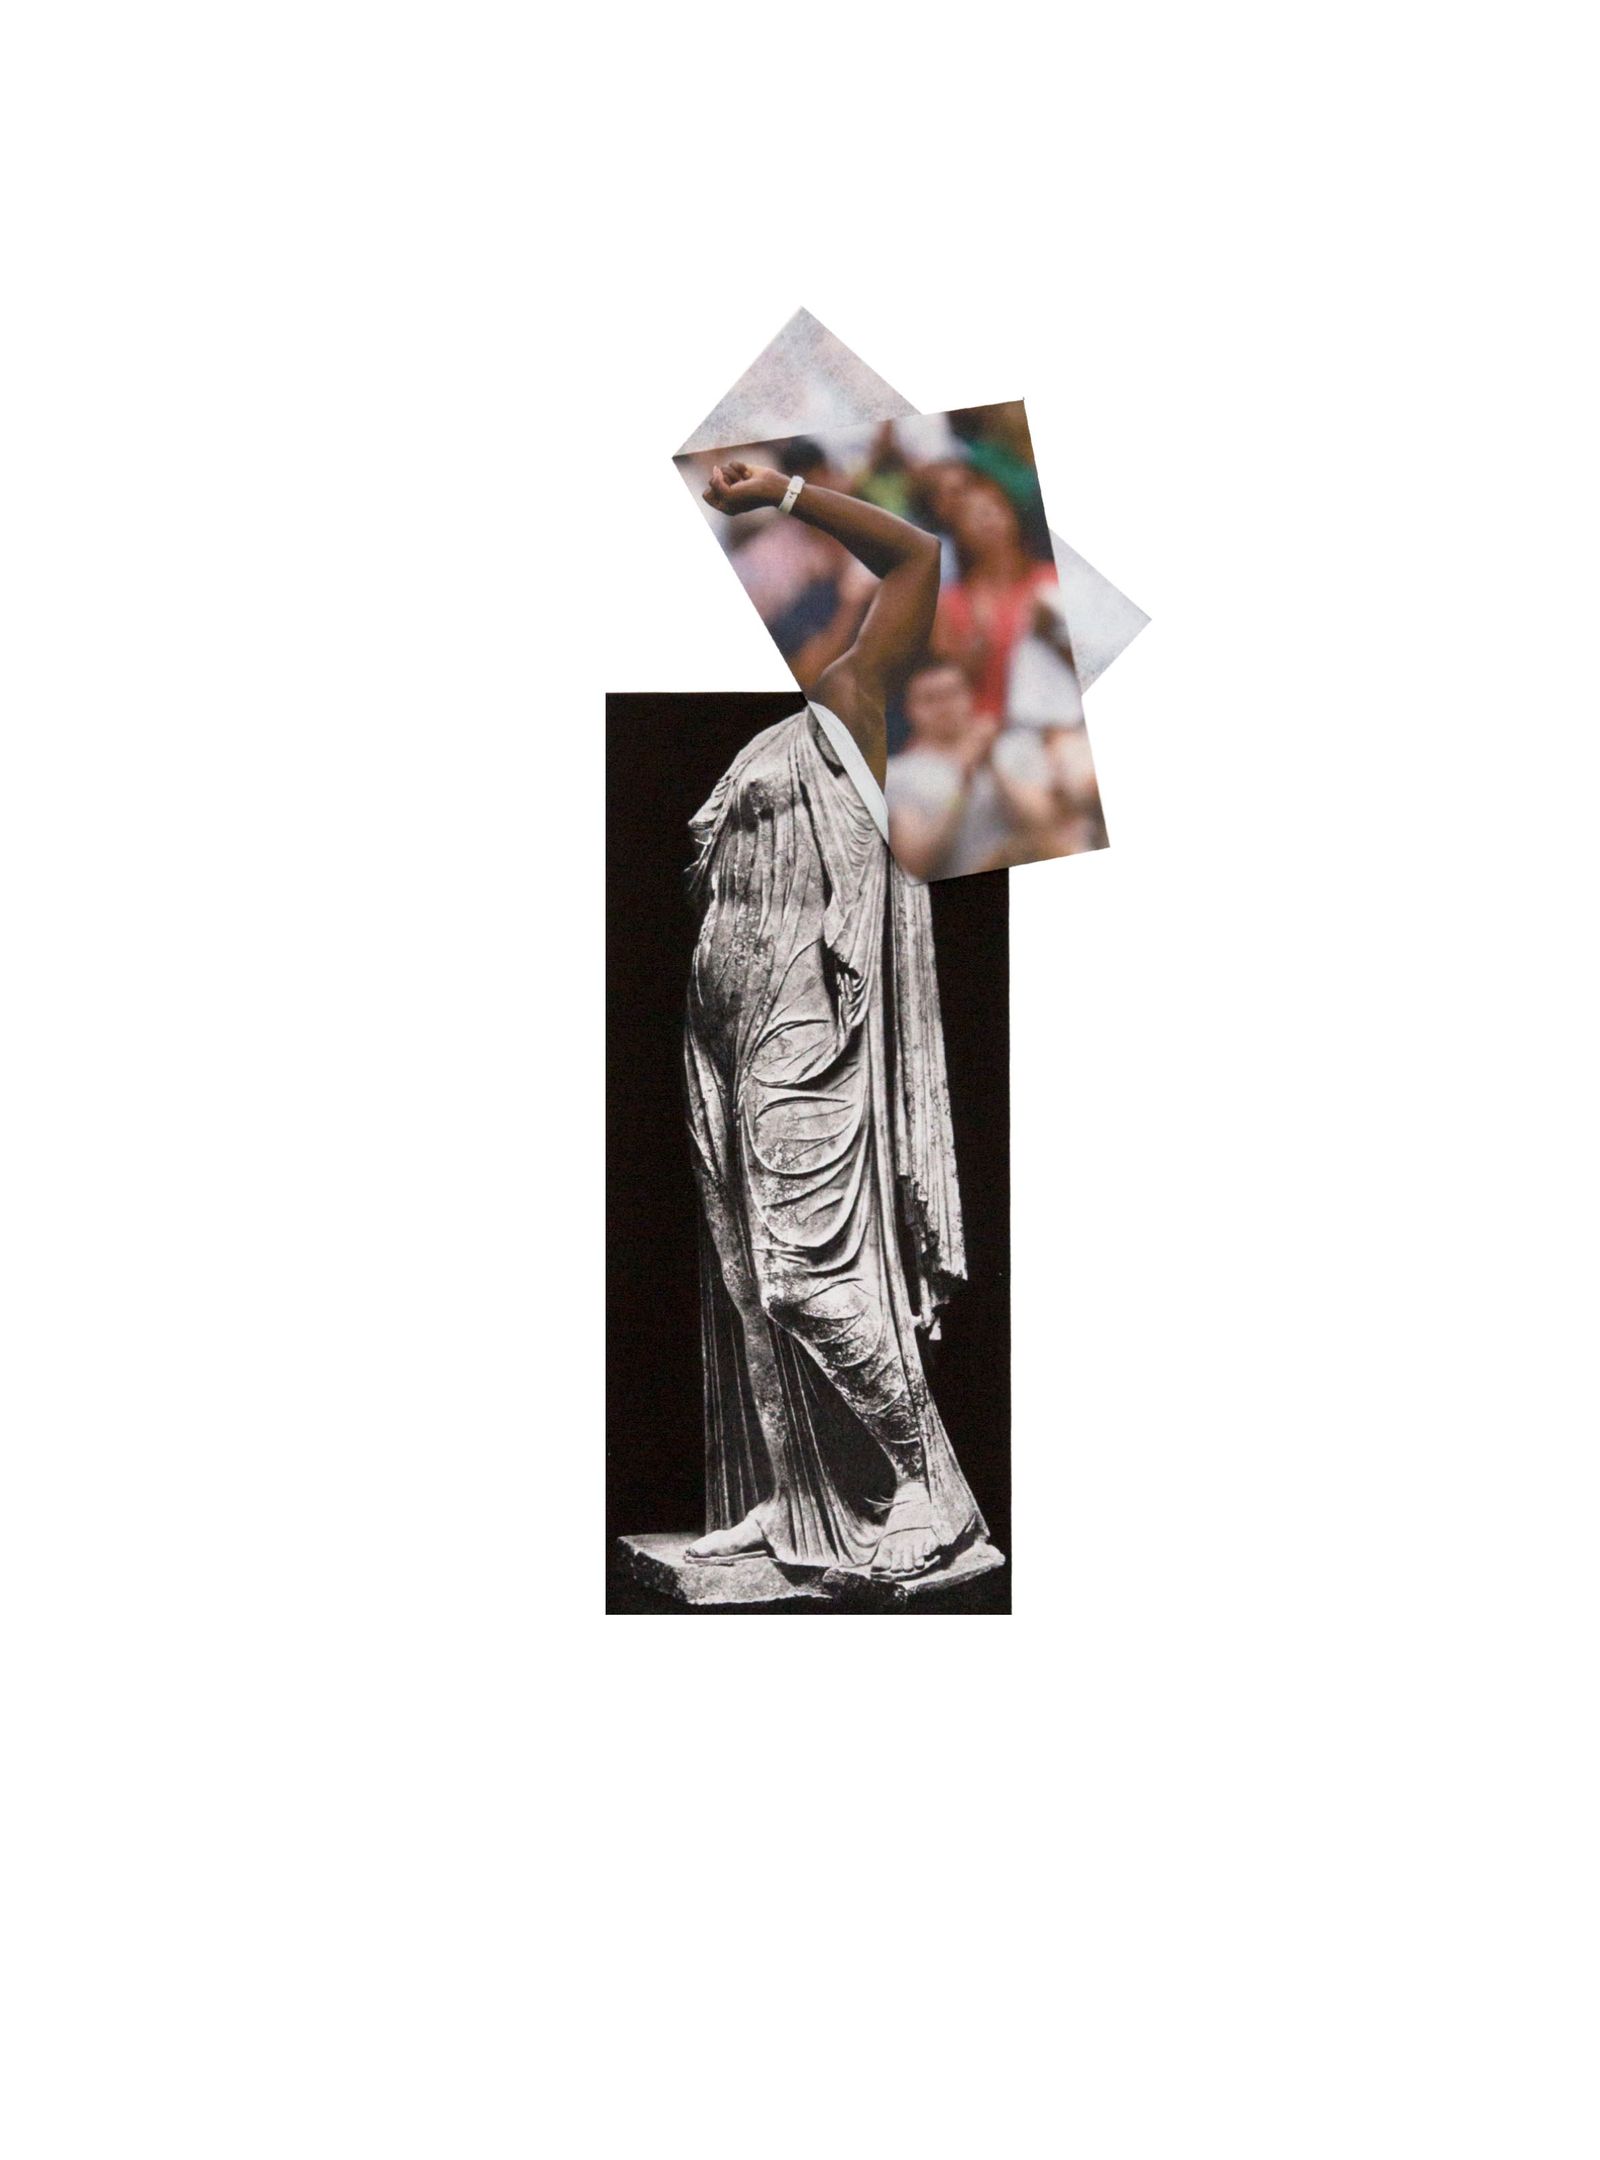 © Ira Lombardia - Impudens Venus VII Collage Photographic print on kozo and bamboo paper, 76 x 61 cm 2020